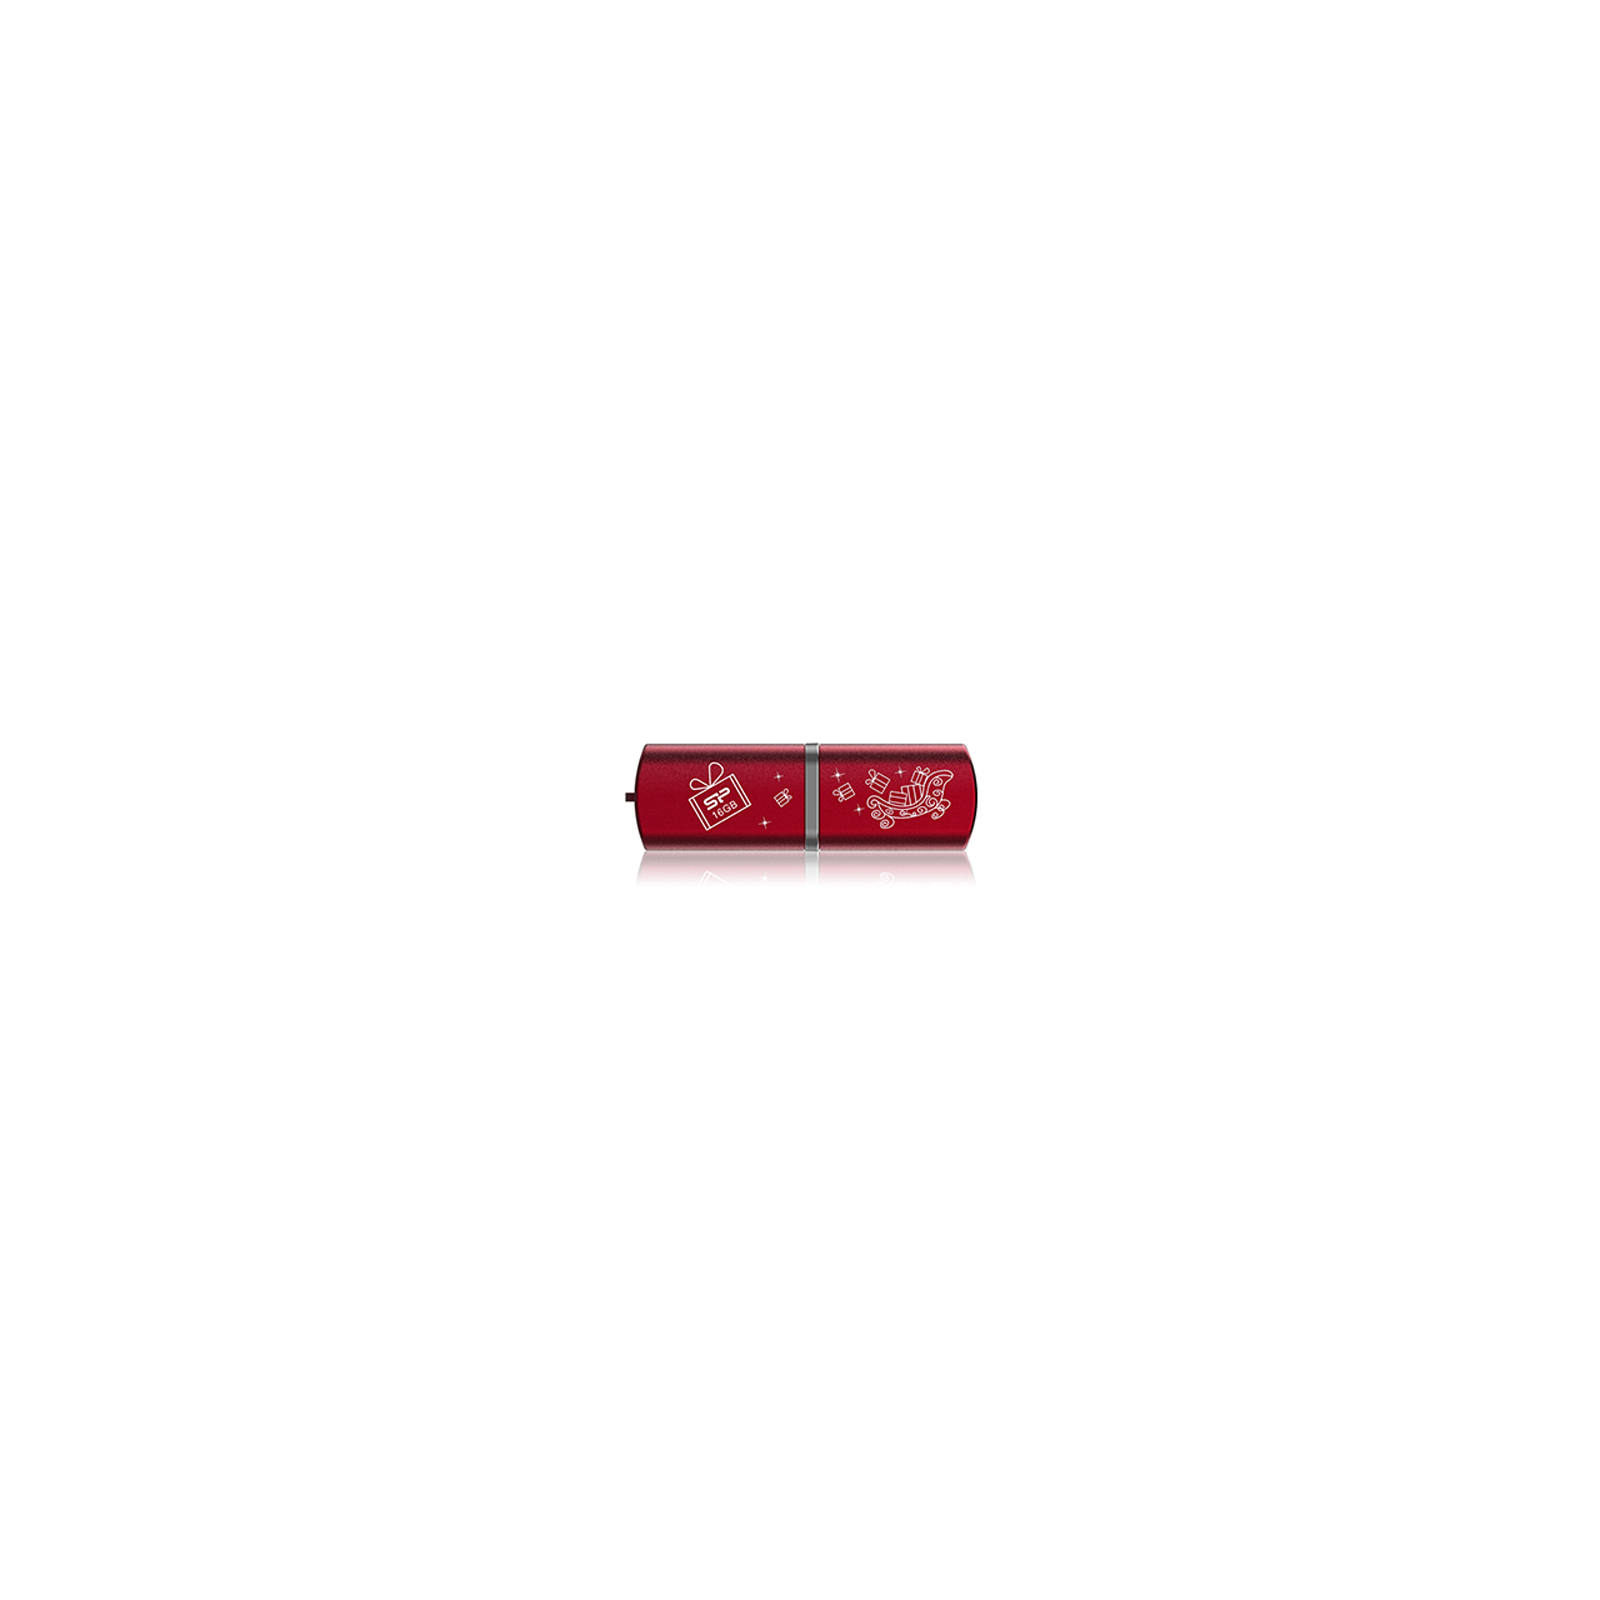 USB флеш накопитель Silicon Power 64GB LuxMini 720 USB 2.0 (SP064GBUF2720V1Z)